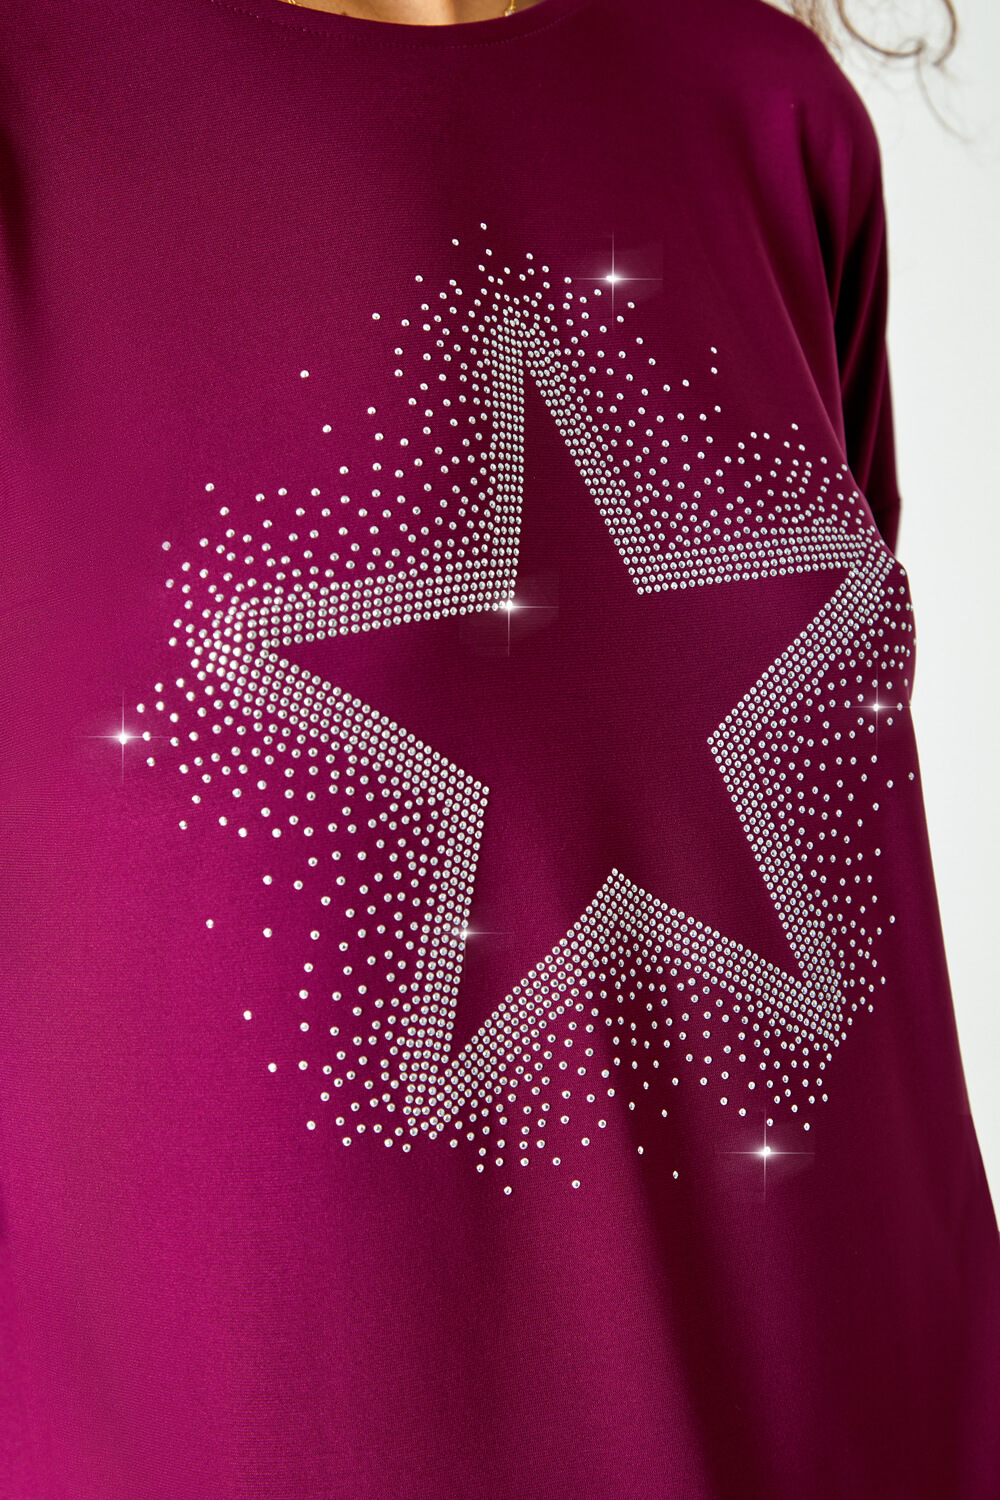 MAGENTA Embellished Star Print Stretch Top, Image 5 of 5